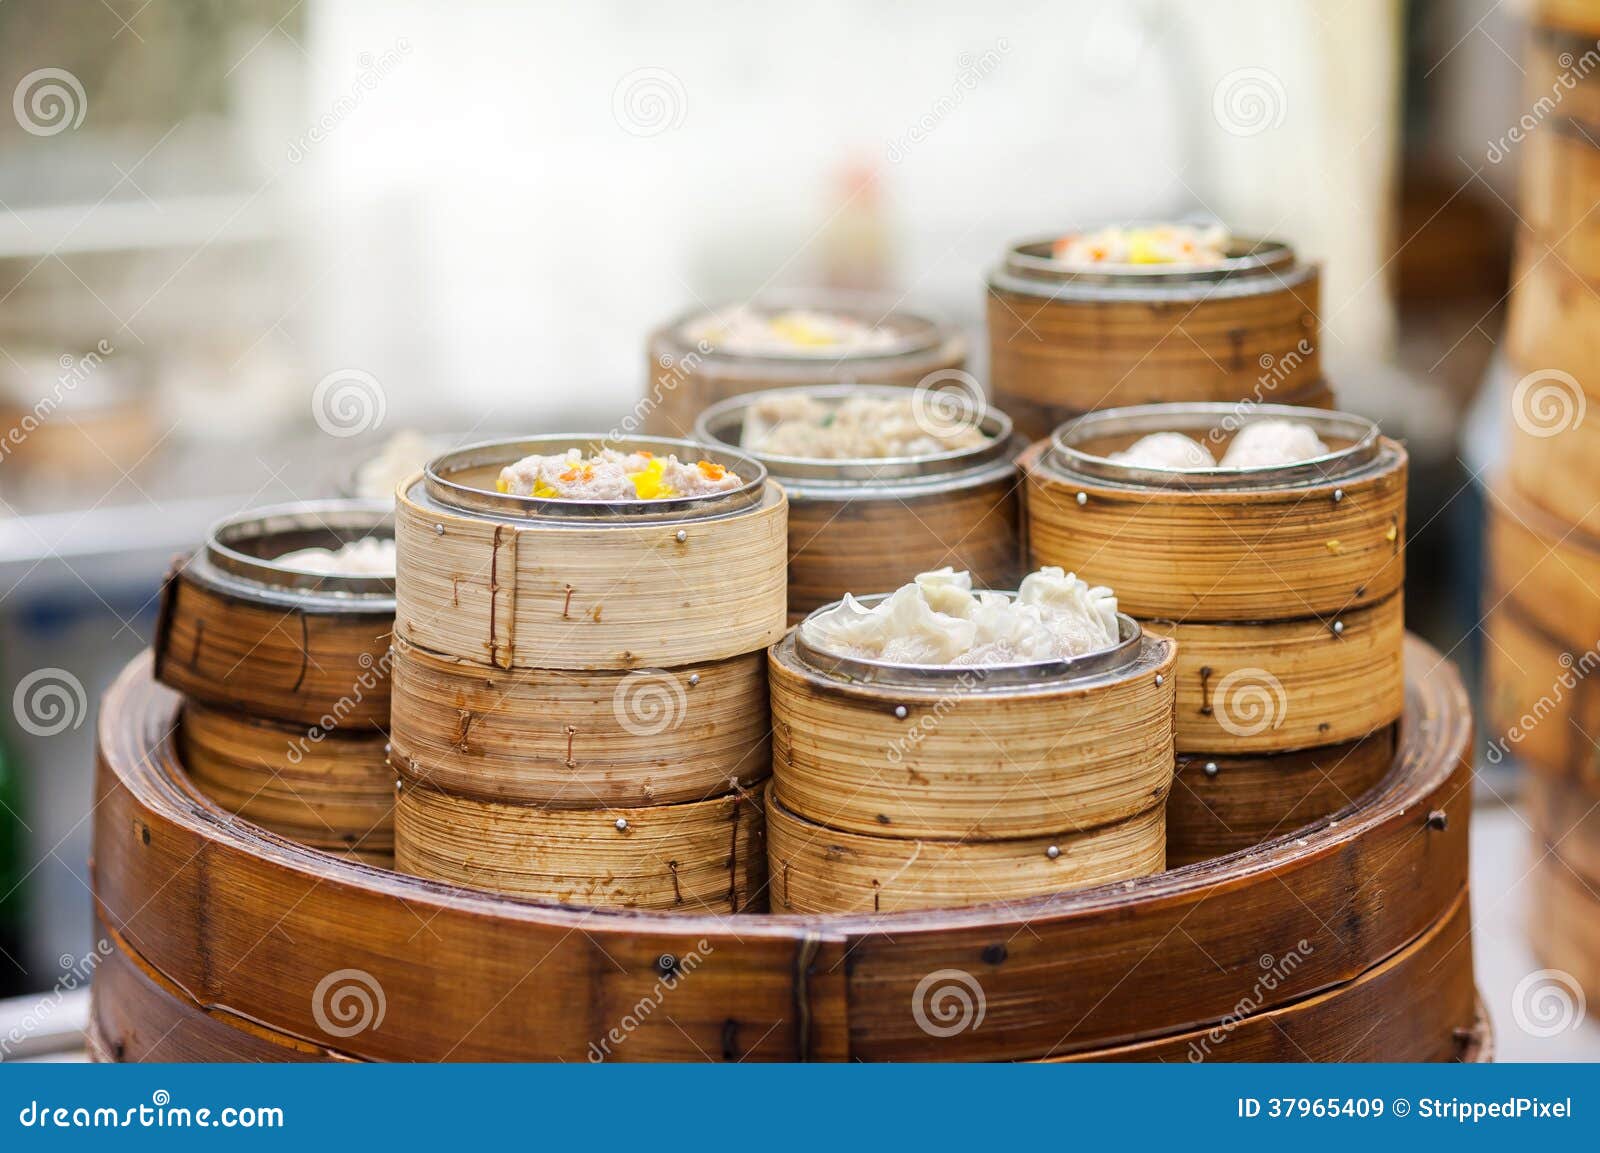 dim sum steamers at a chinese restaurant, hong kong